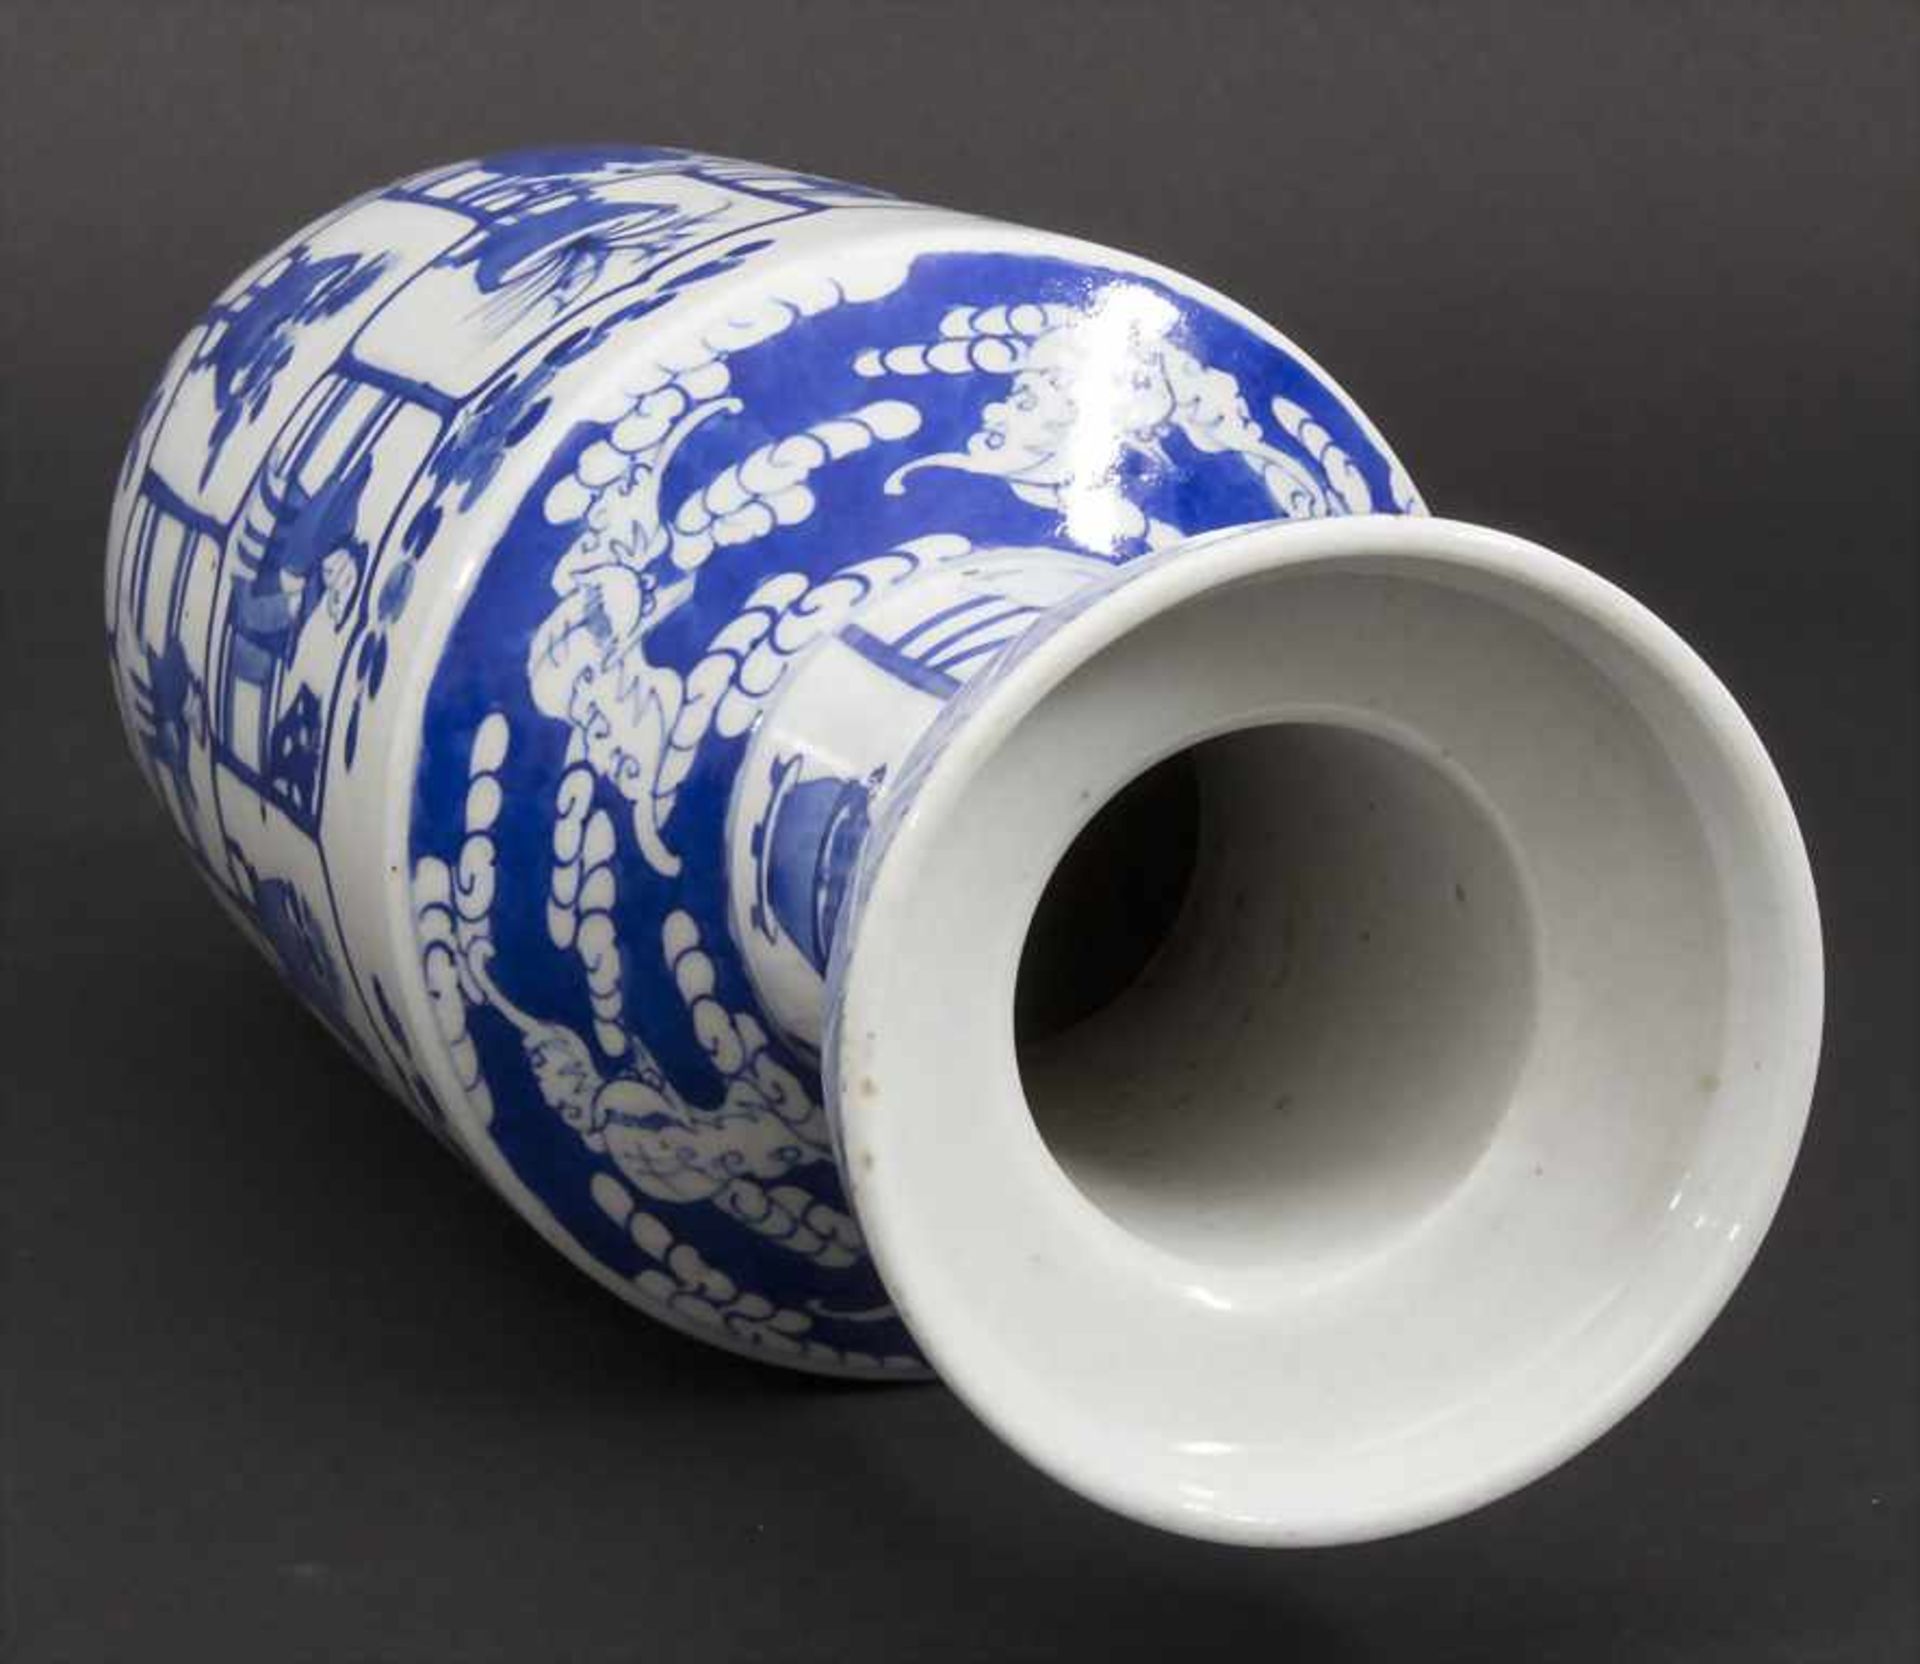 Ziervase / A decorative vase, China, Qing-Dynastie (1644-1911), wohl Kangxi-Periode (1662-1722) - Bild 3 aus 5